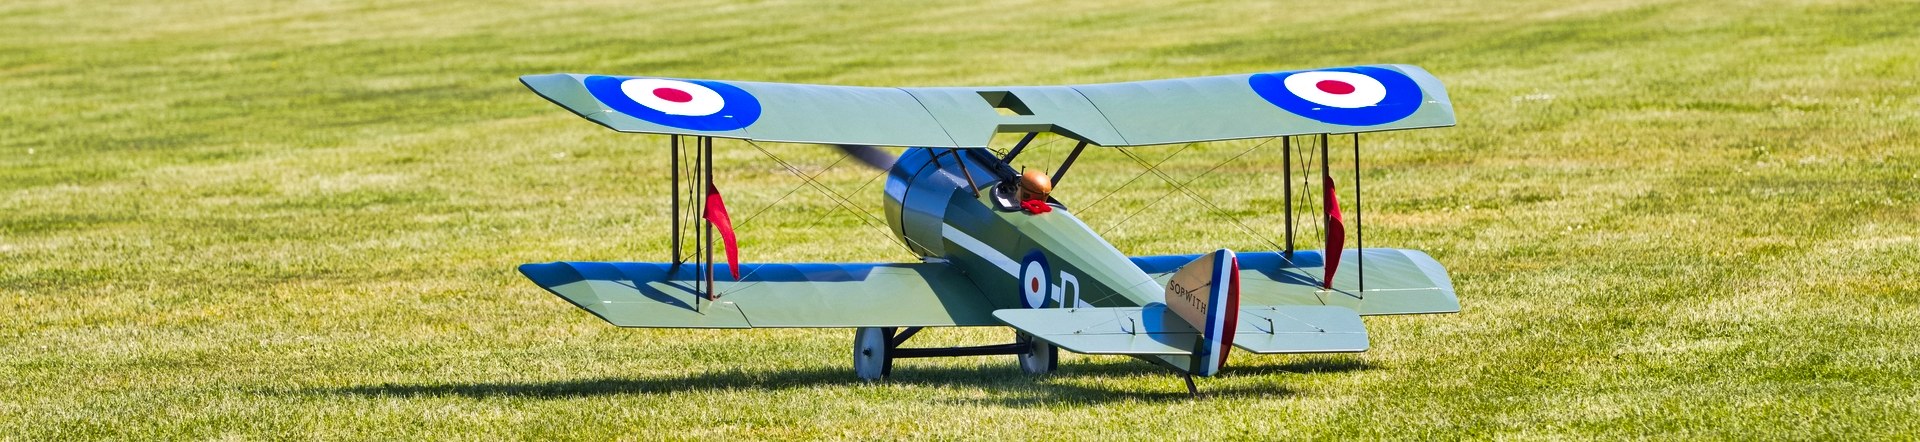 Modellflugzeug Doppeldecker Sopwith